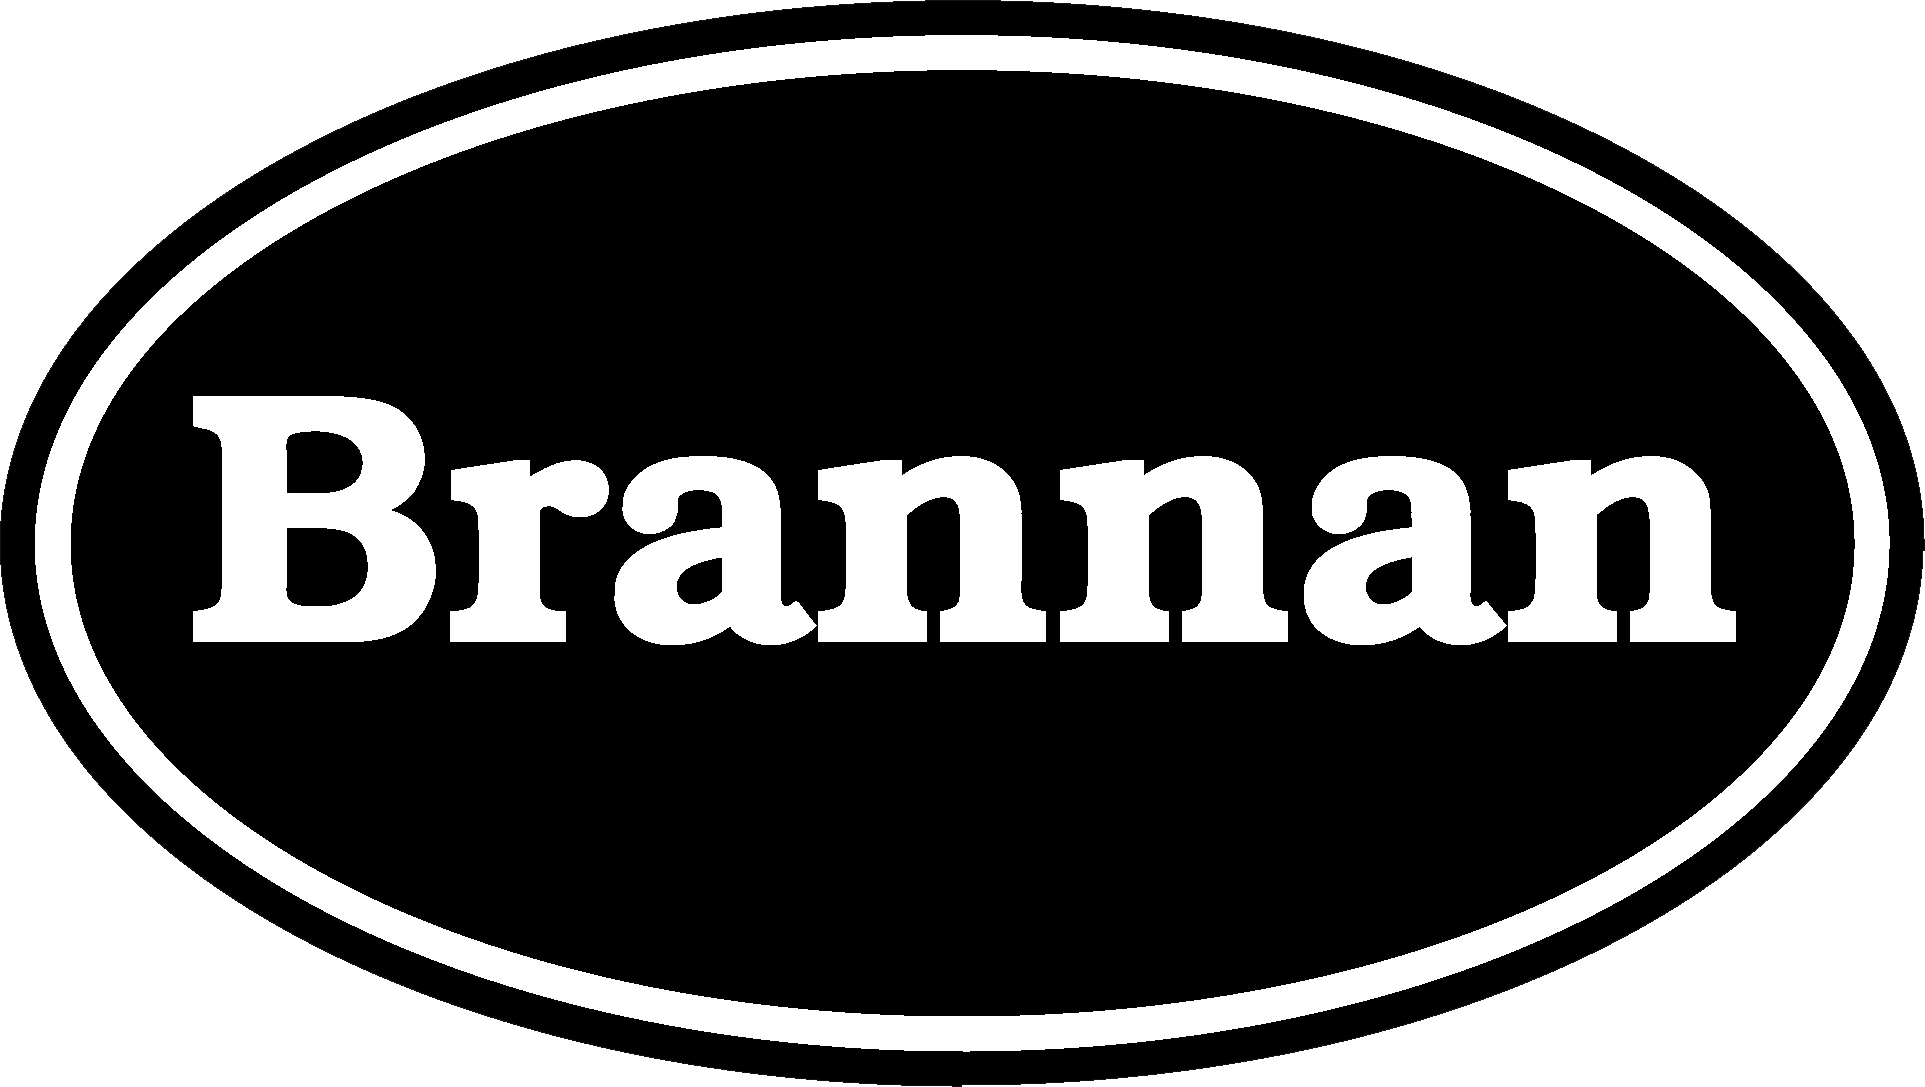 Brannan logo